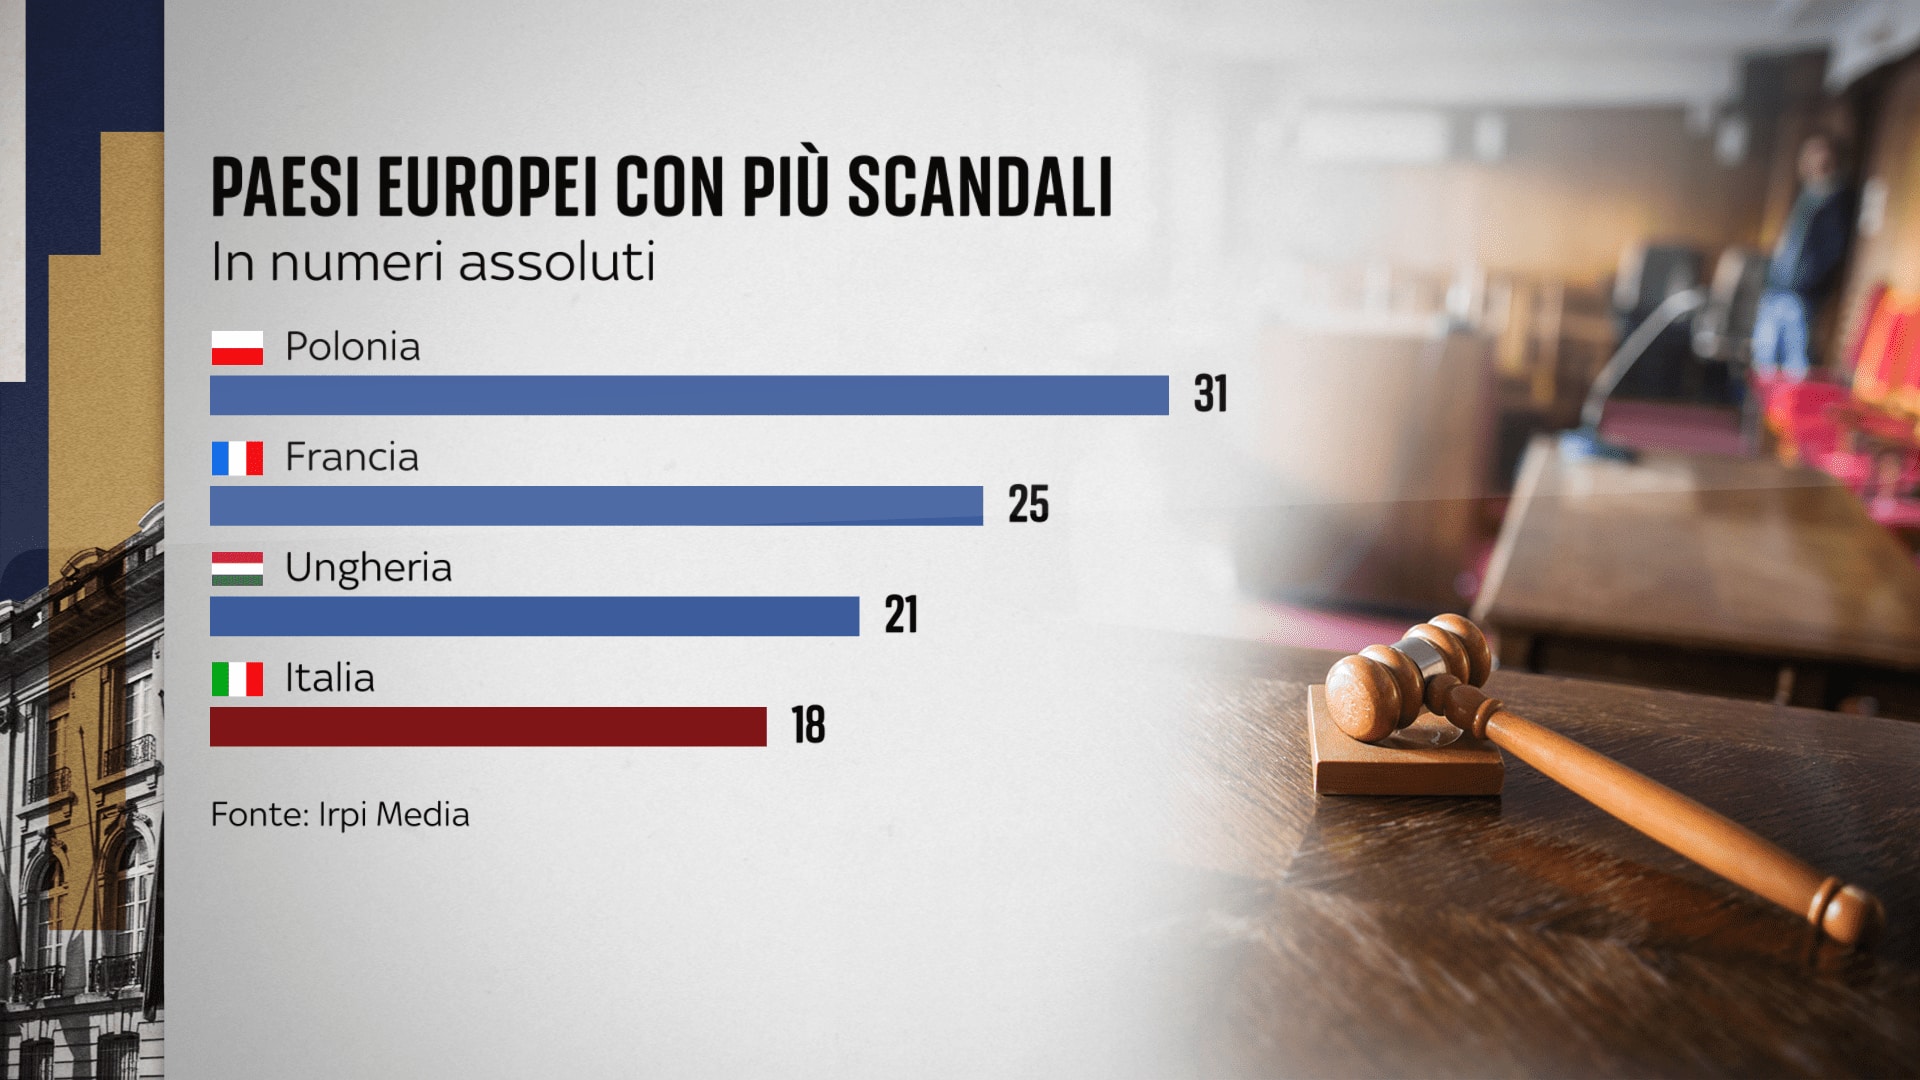 I Paesi europei con più scandali in numeri assoluti